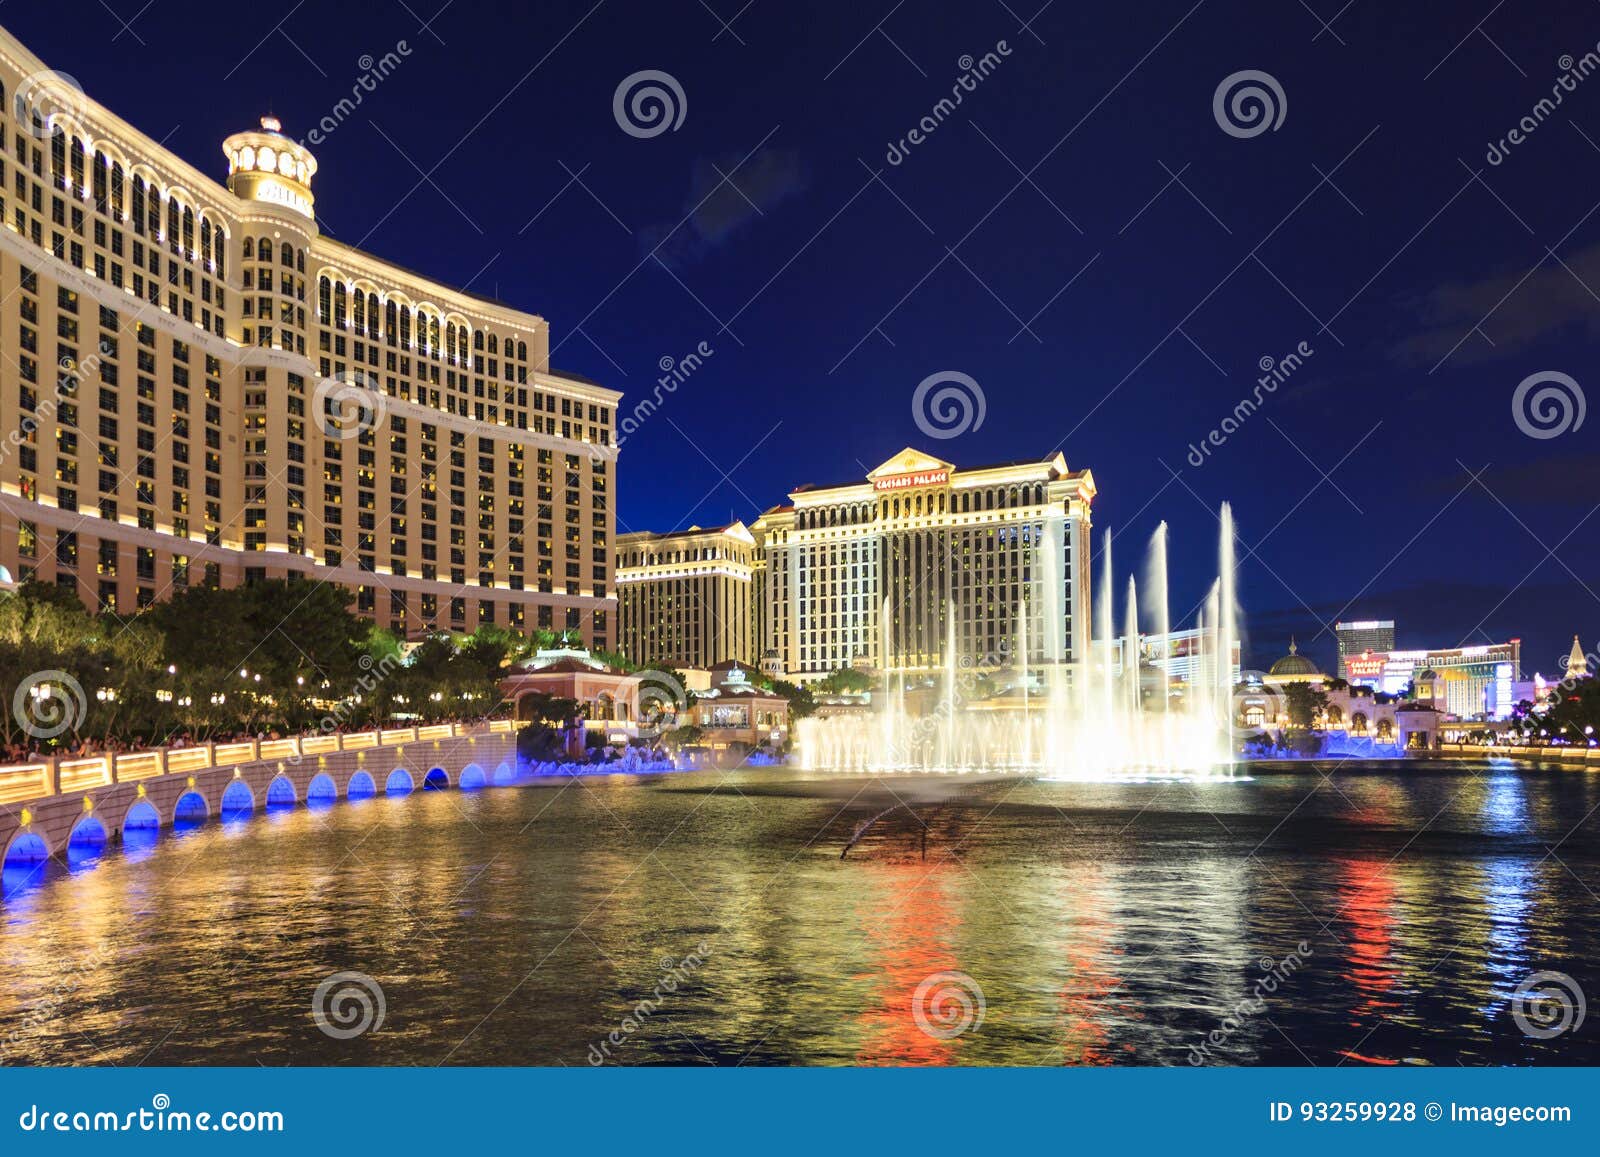 The Bellagio Hotel Las Vegas Editorial Stock Photo Image